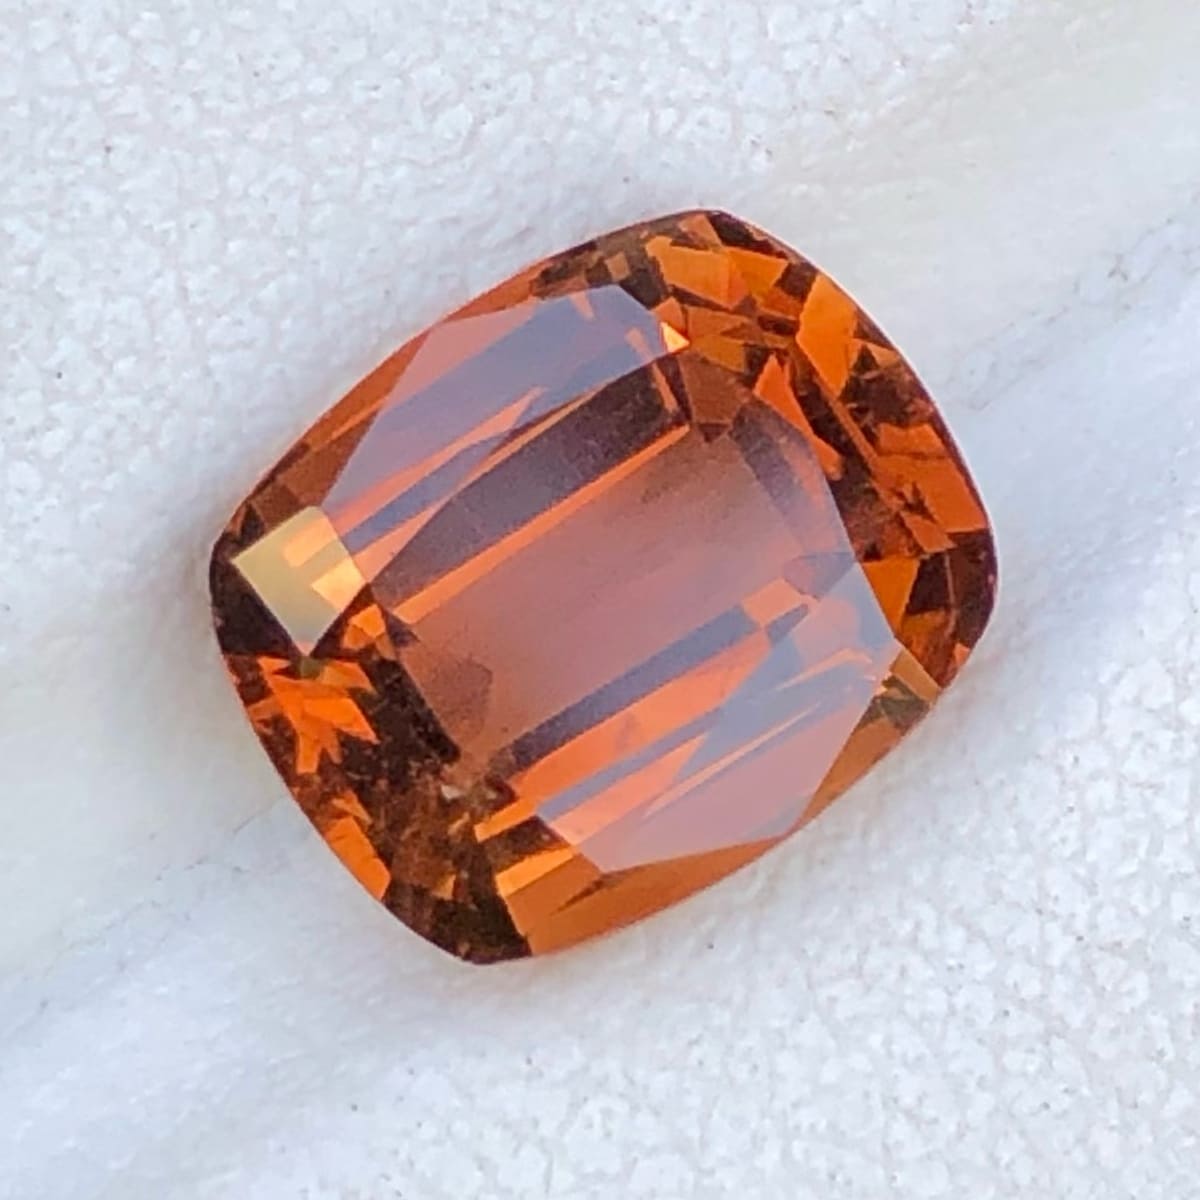 3.9 carats Loose Orange Topaz